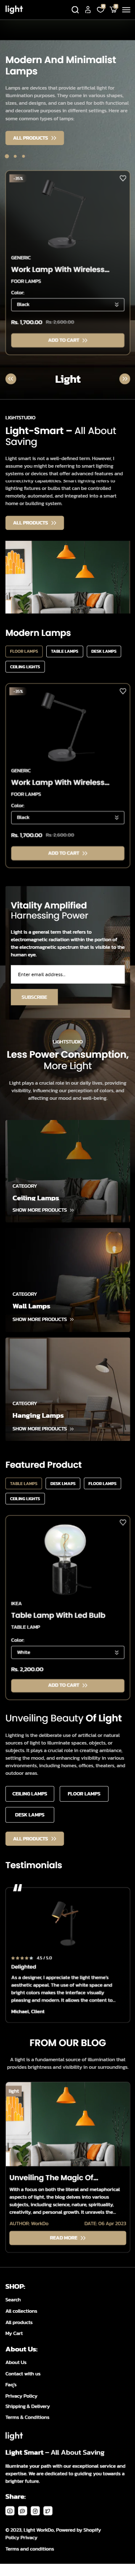 Light Shopify Theme - WorkDo